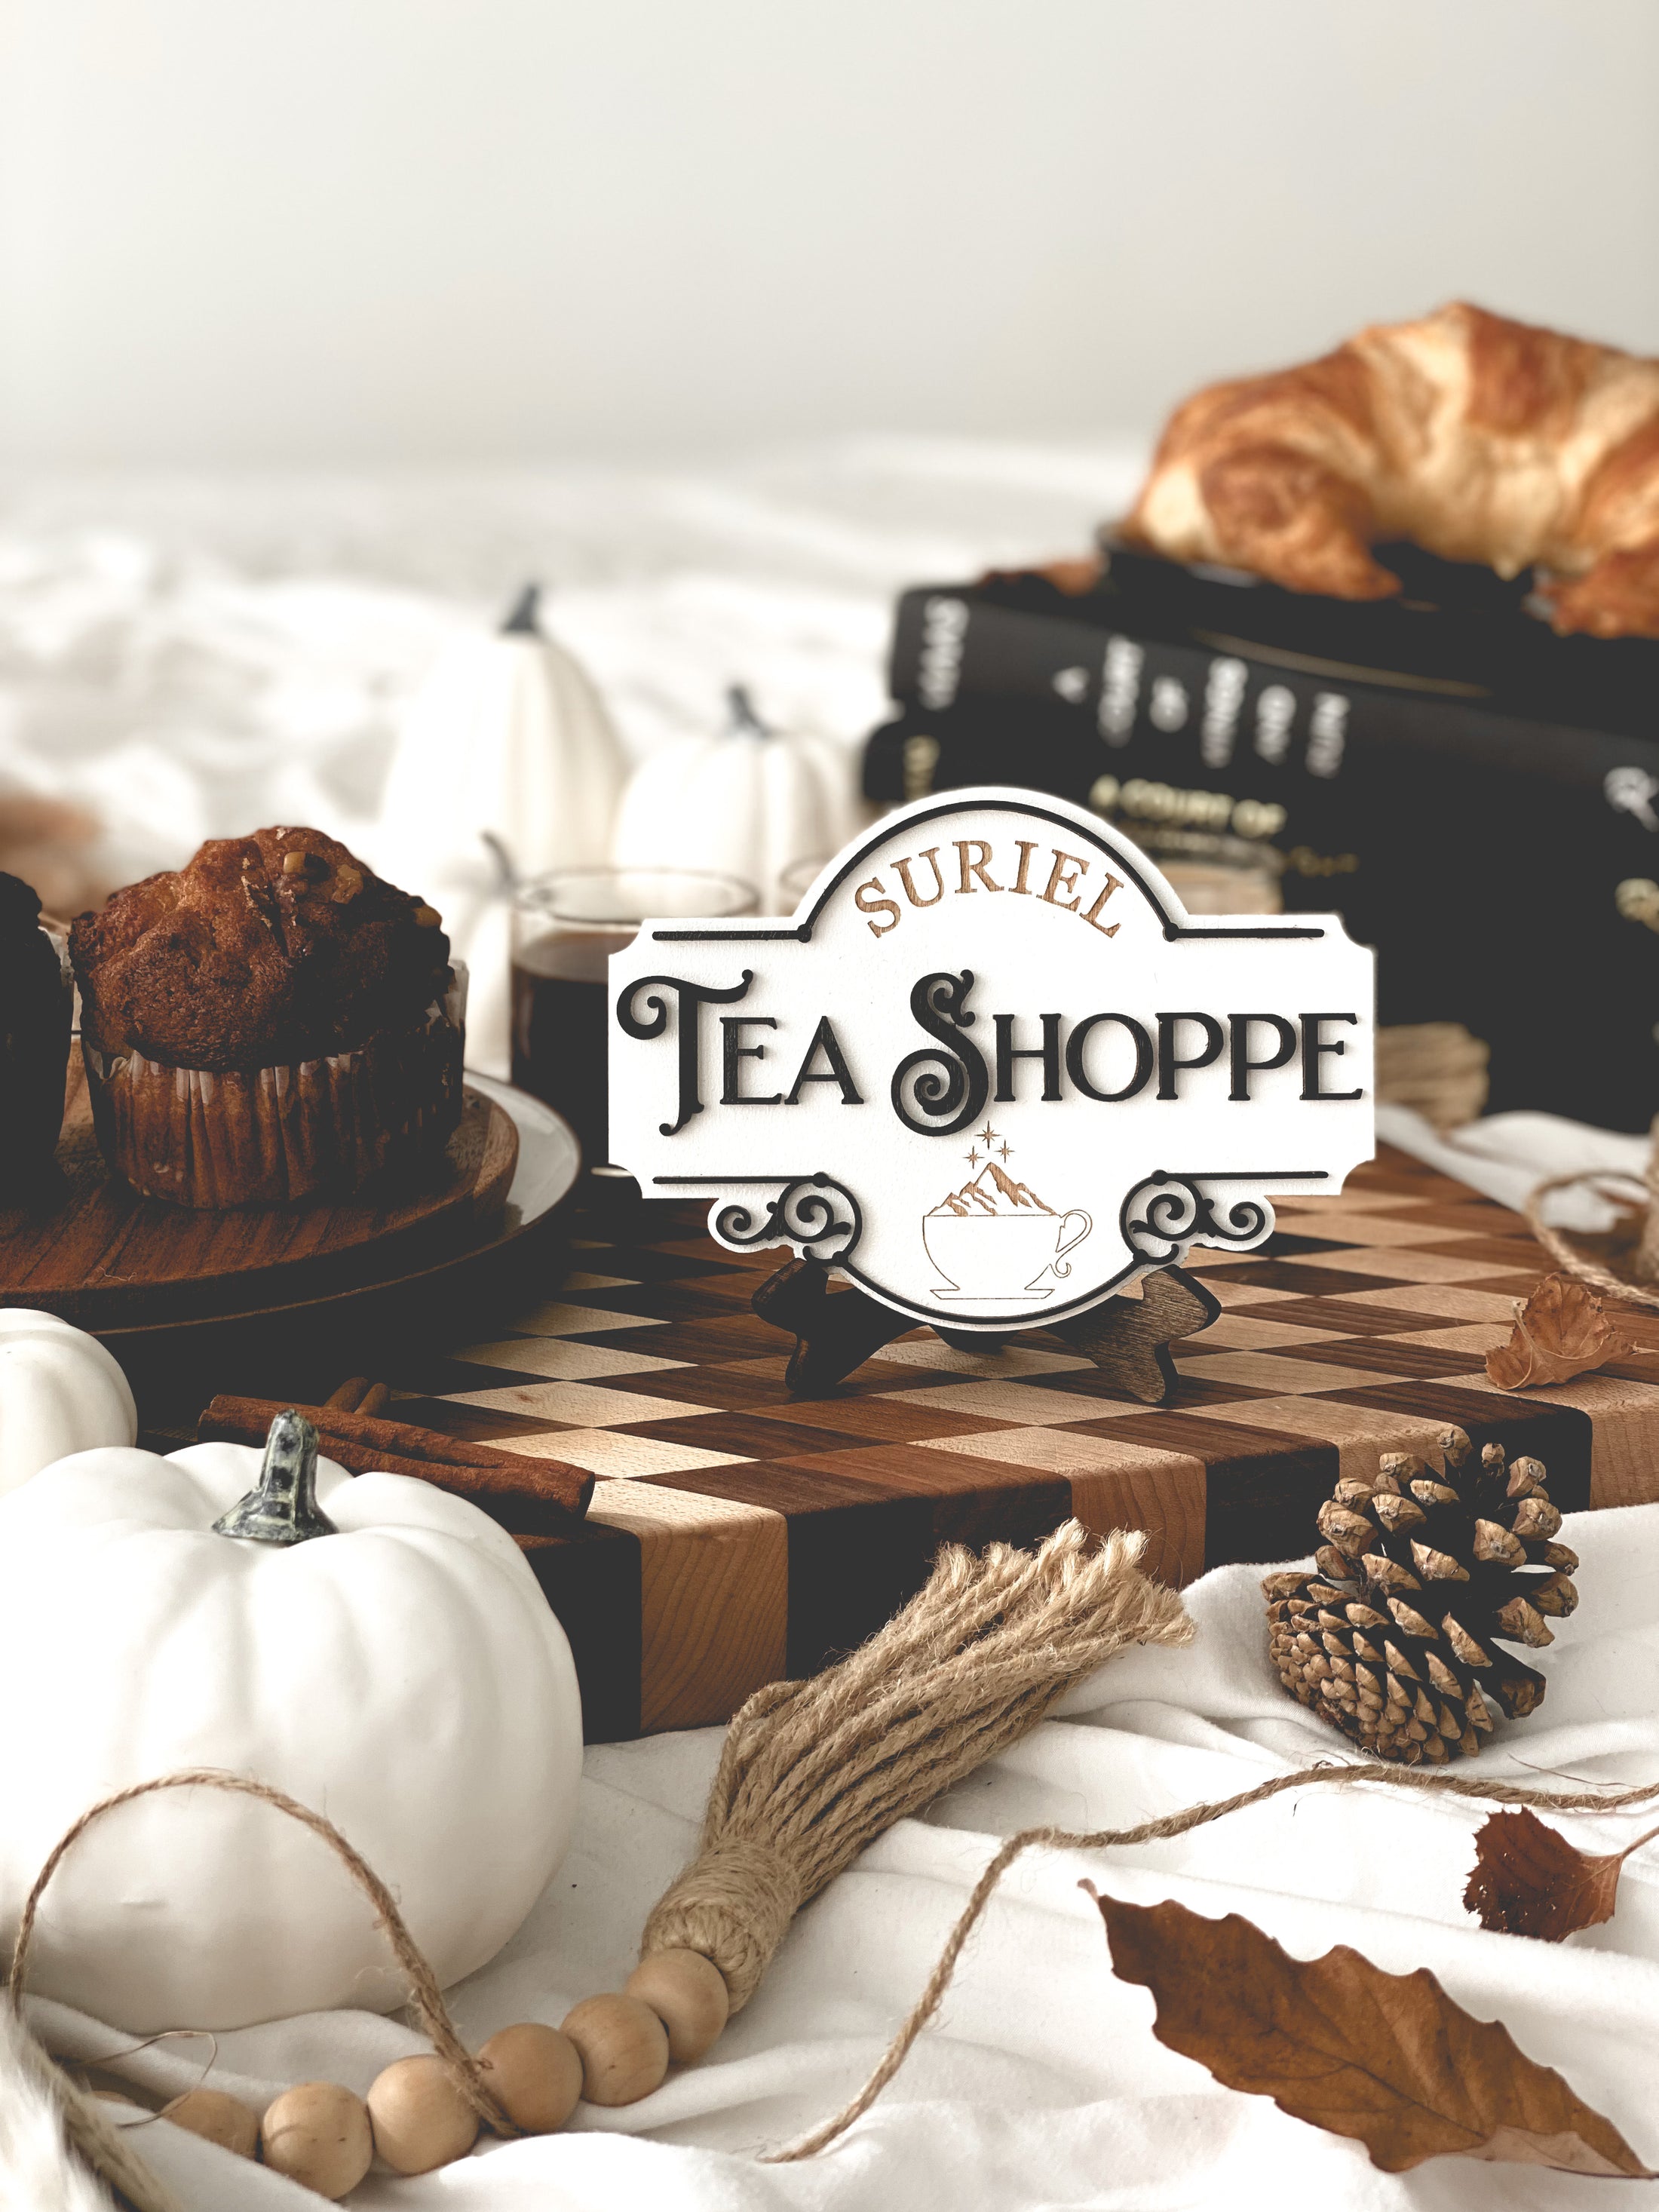 Surel Tea Shoppe Sign FireDrake Artistry™